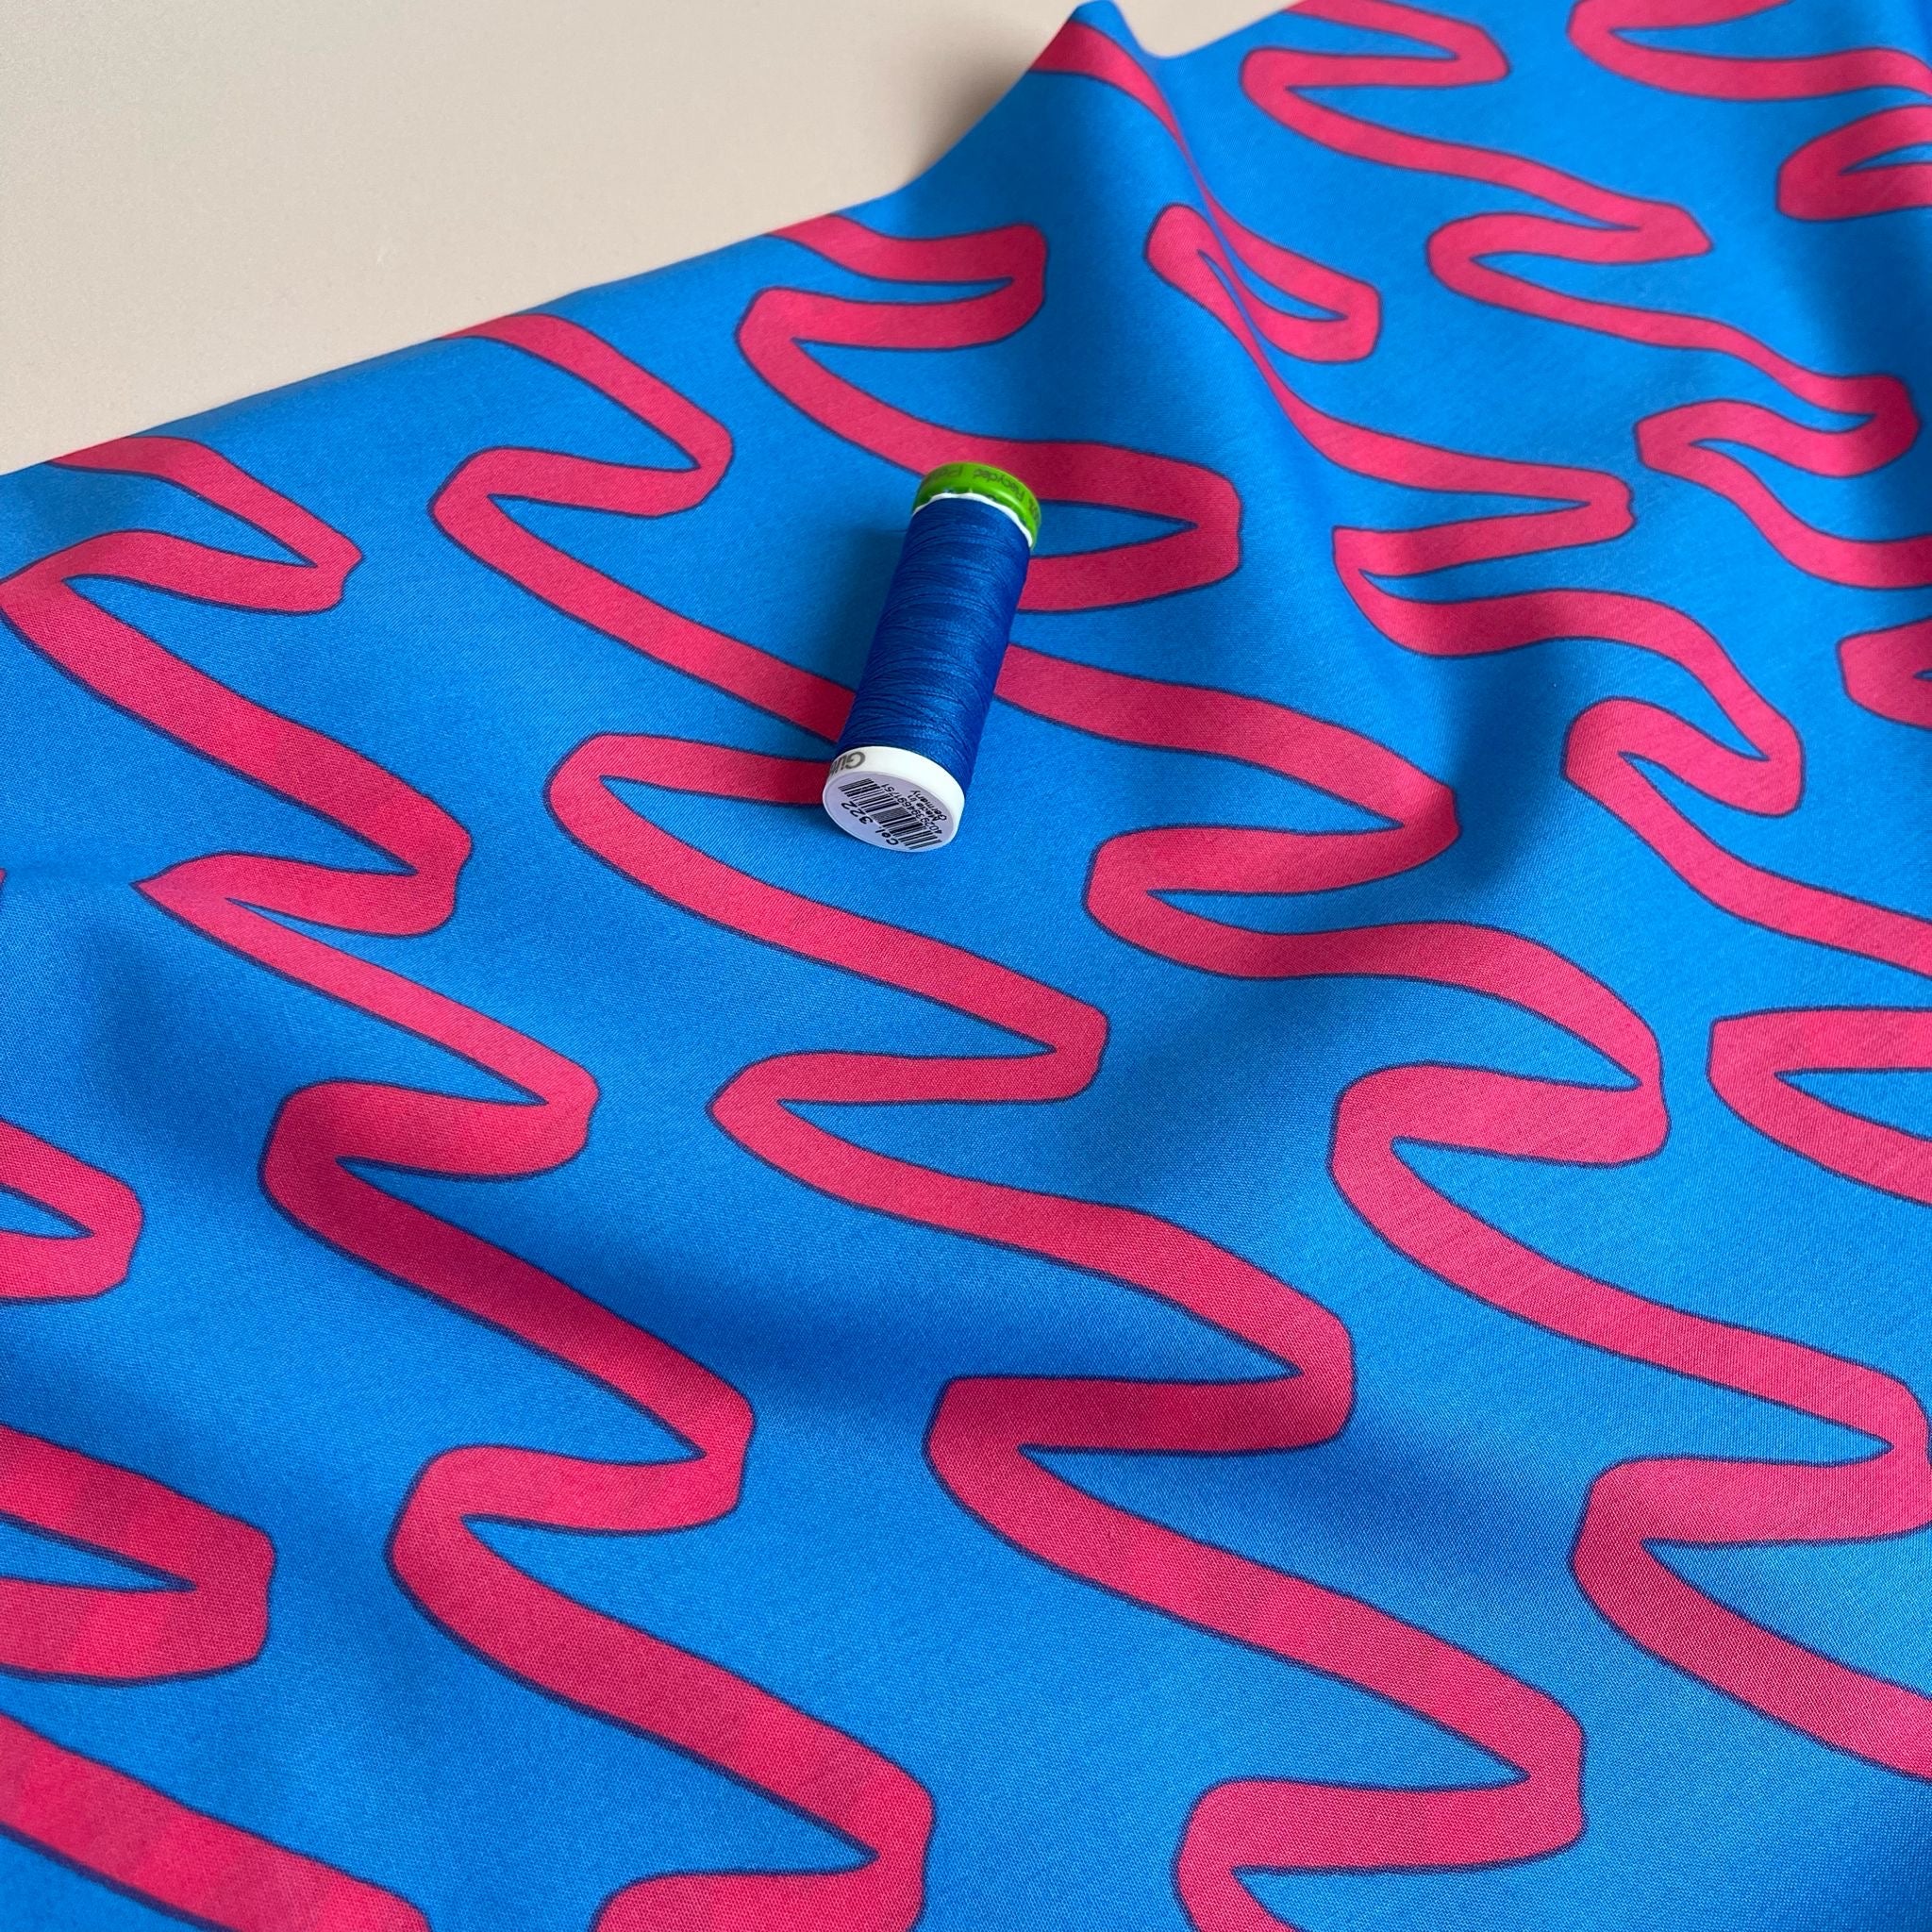 Nerida Hansen - Making Waves on Cobalt Cotton Poplin Fabric